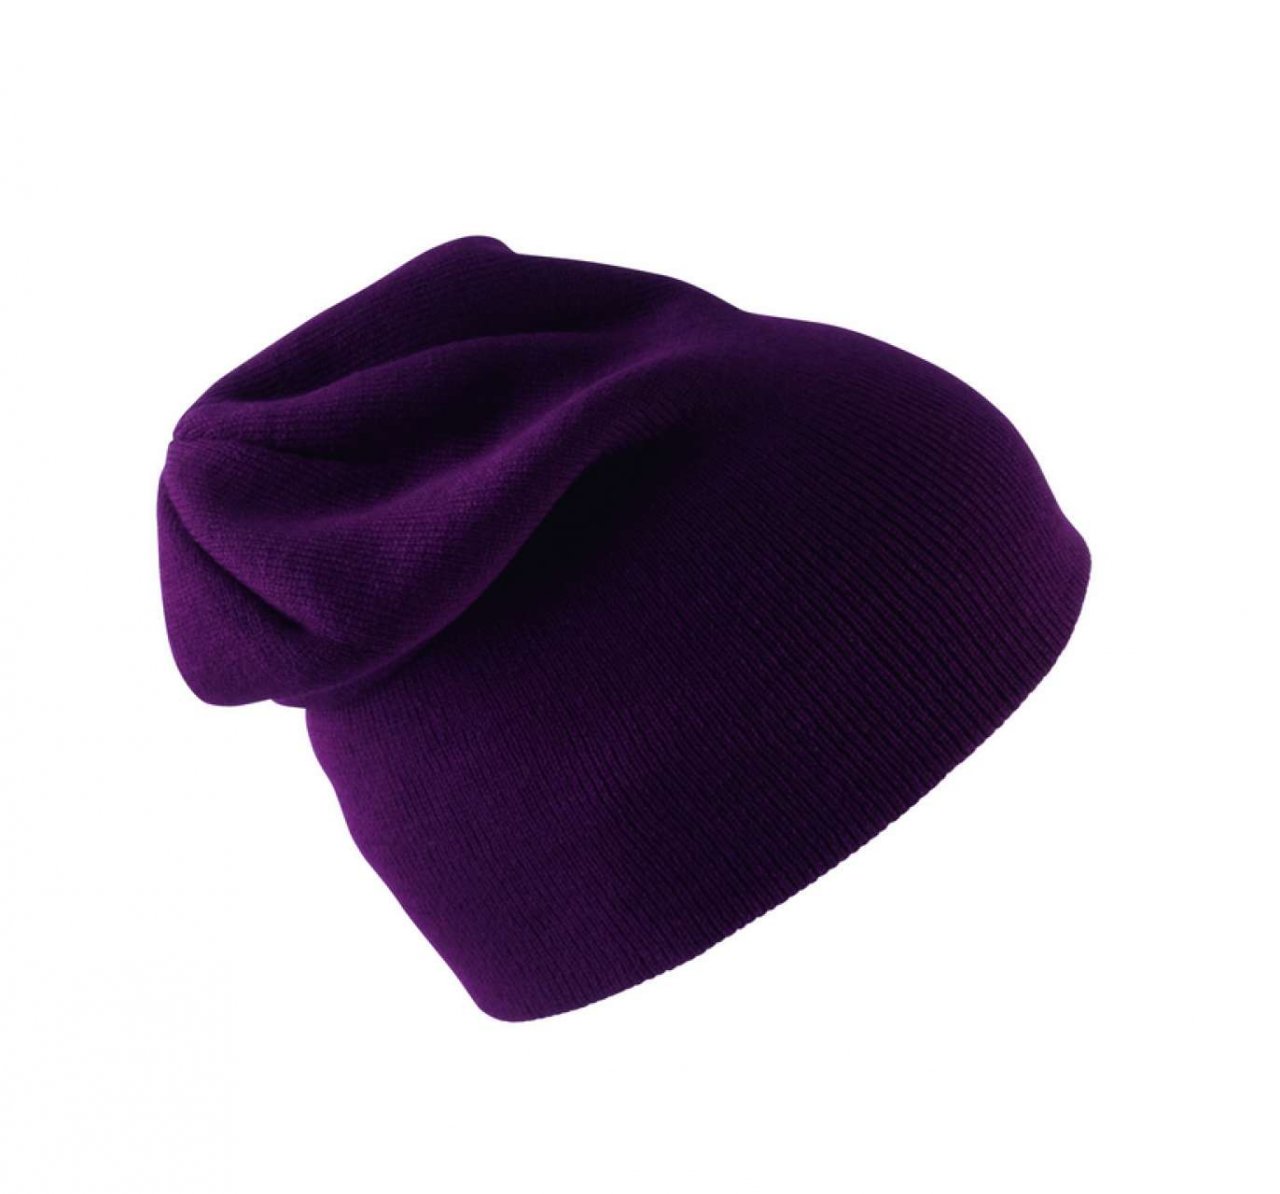  Caciula Knittedknitted-hat-3083.jpg